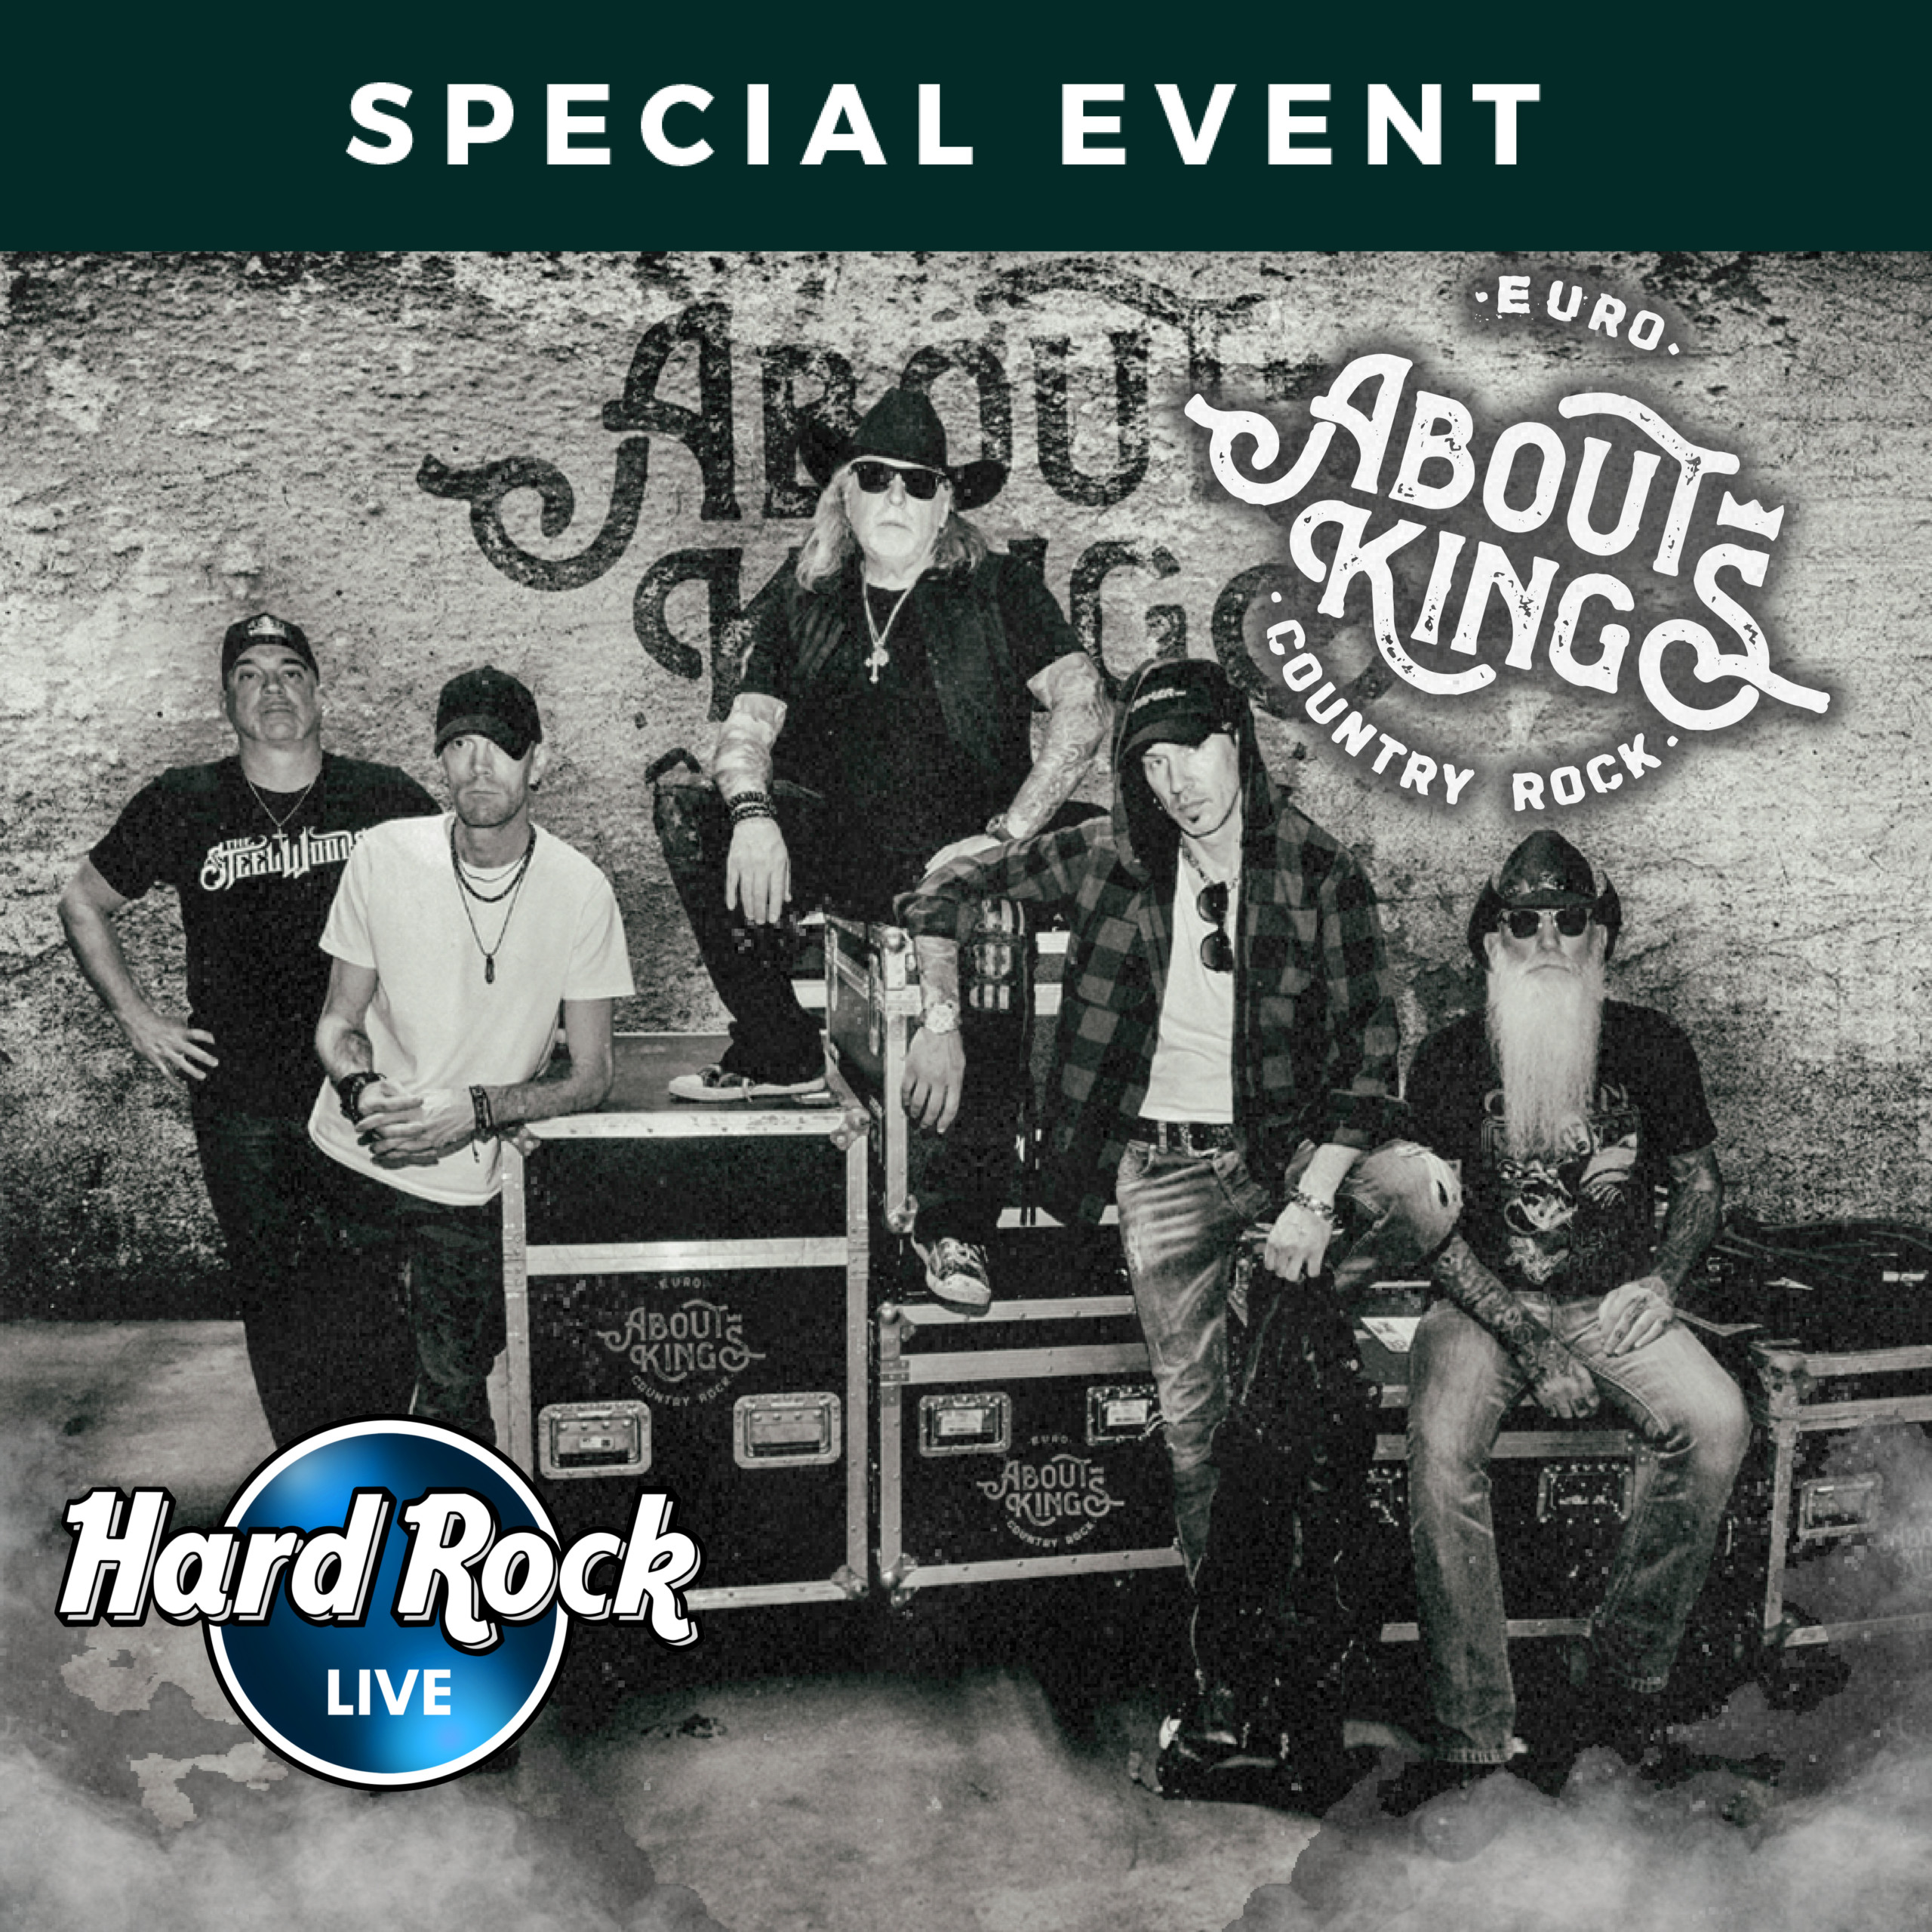 About Kings - Hardrock Live Las Vegas